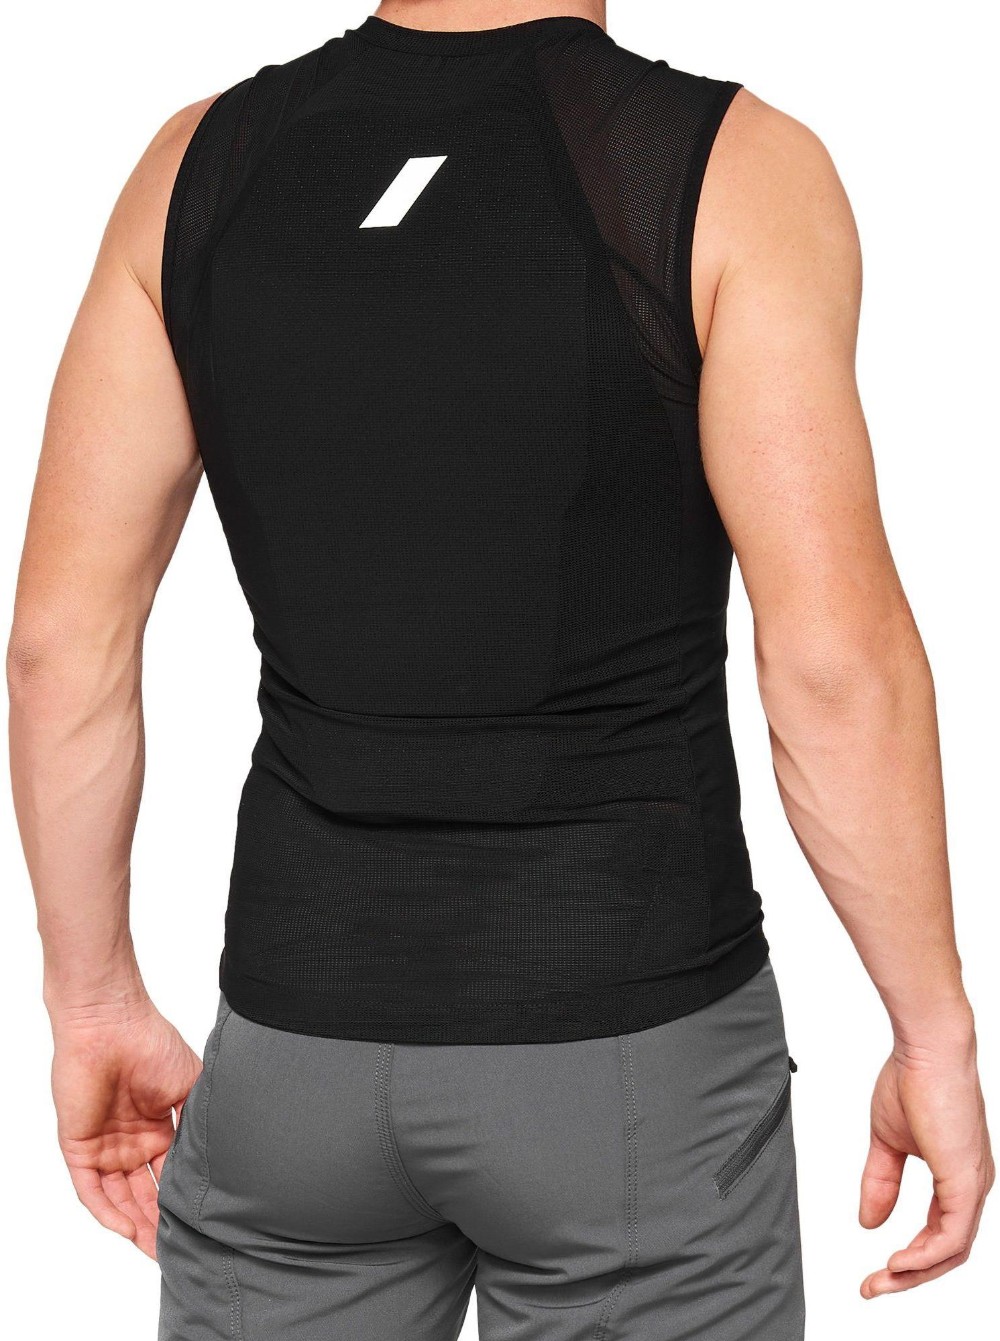 Tarka Protection Vest image 1